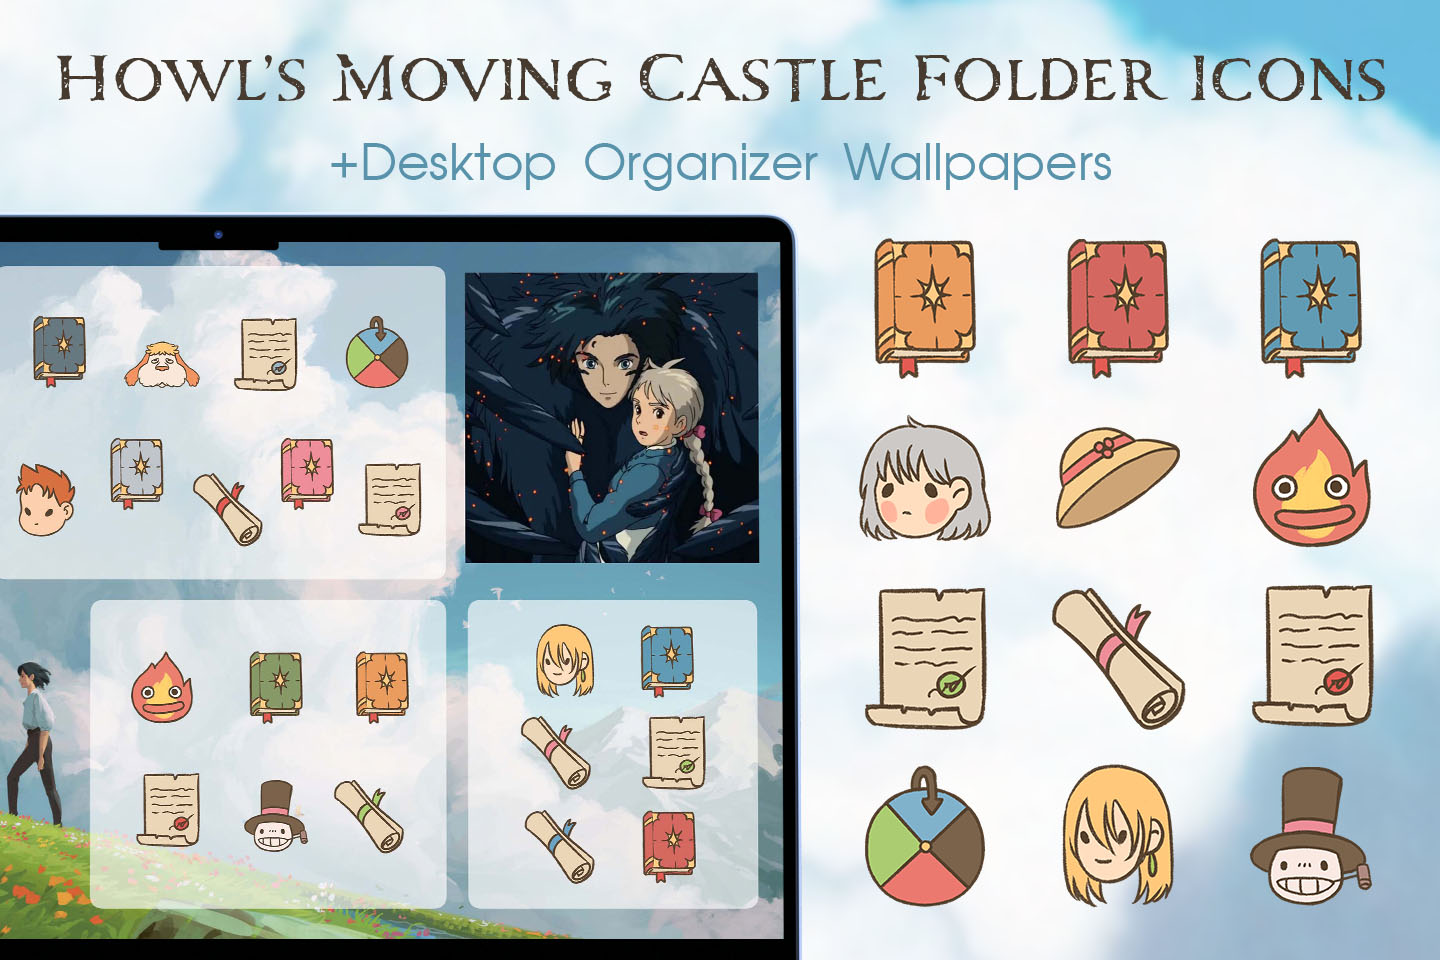 howls moving castle folder icons pack